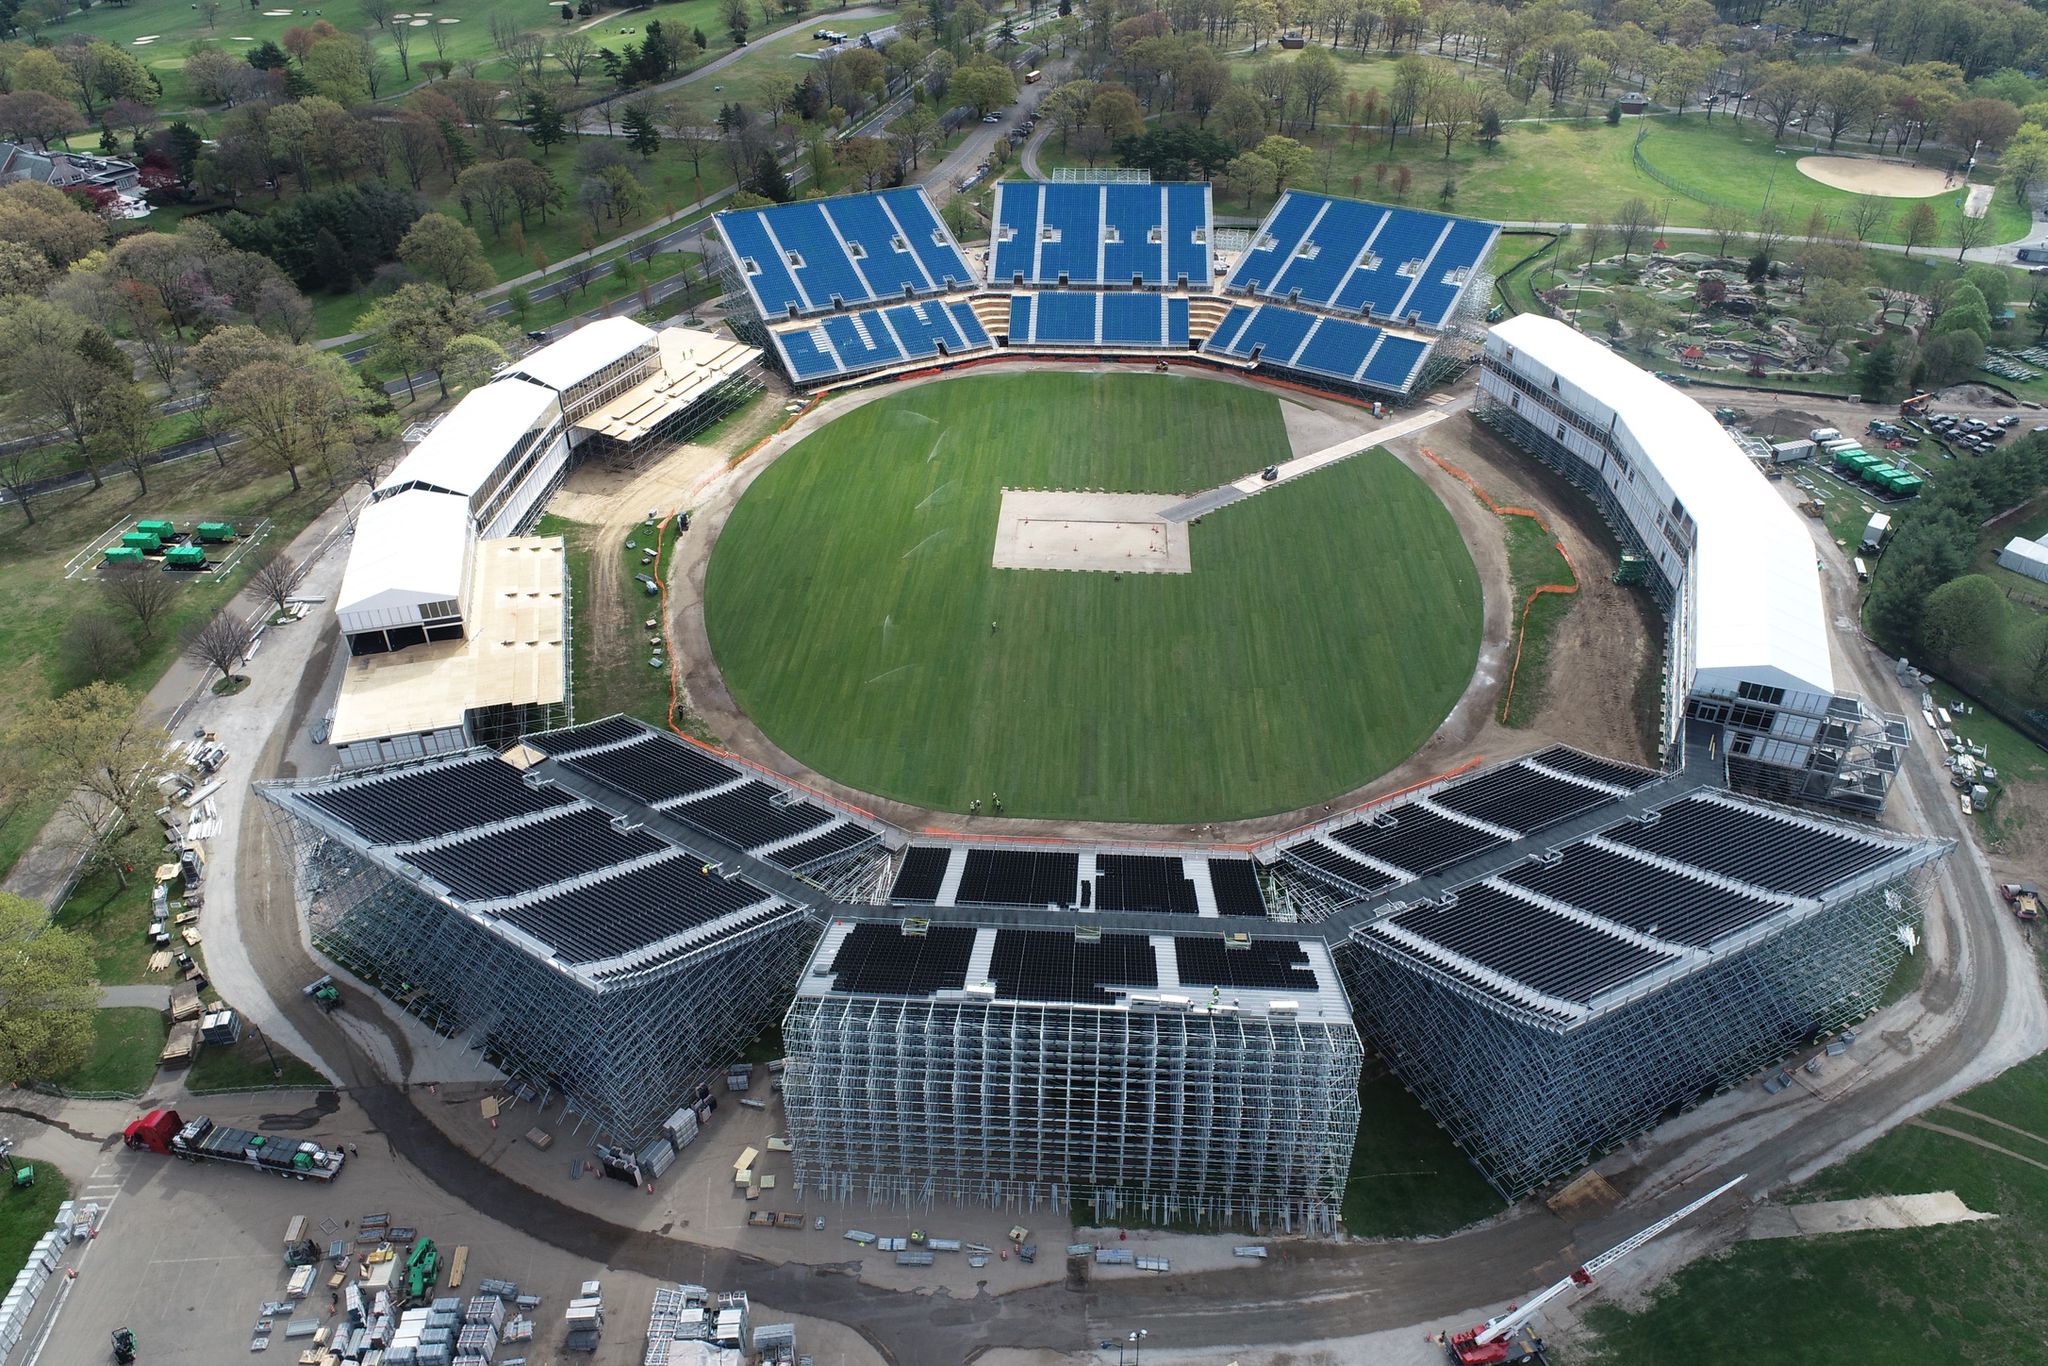 Nassau County International Cricket Stadium completes critical milestone with pitch installation